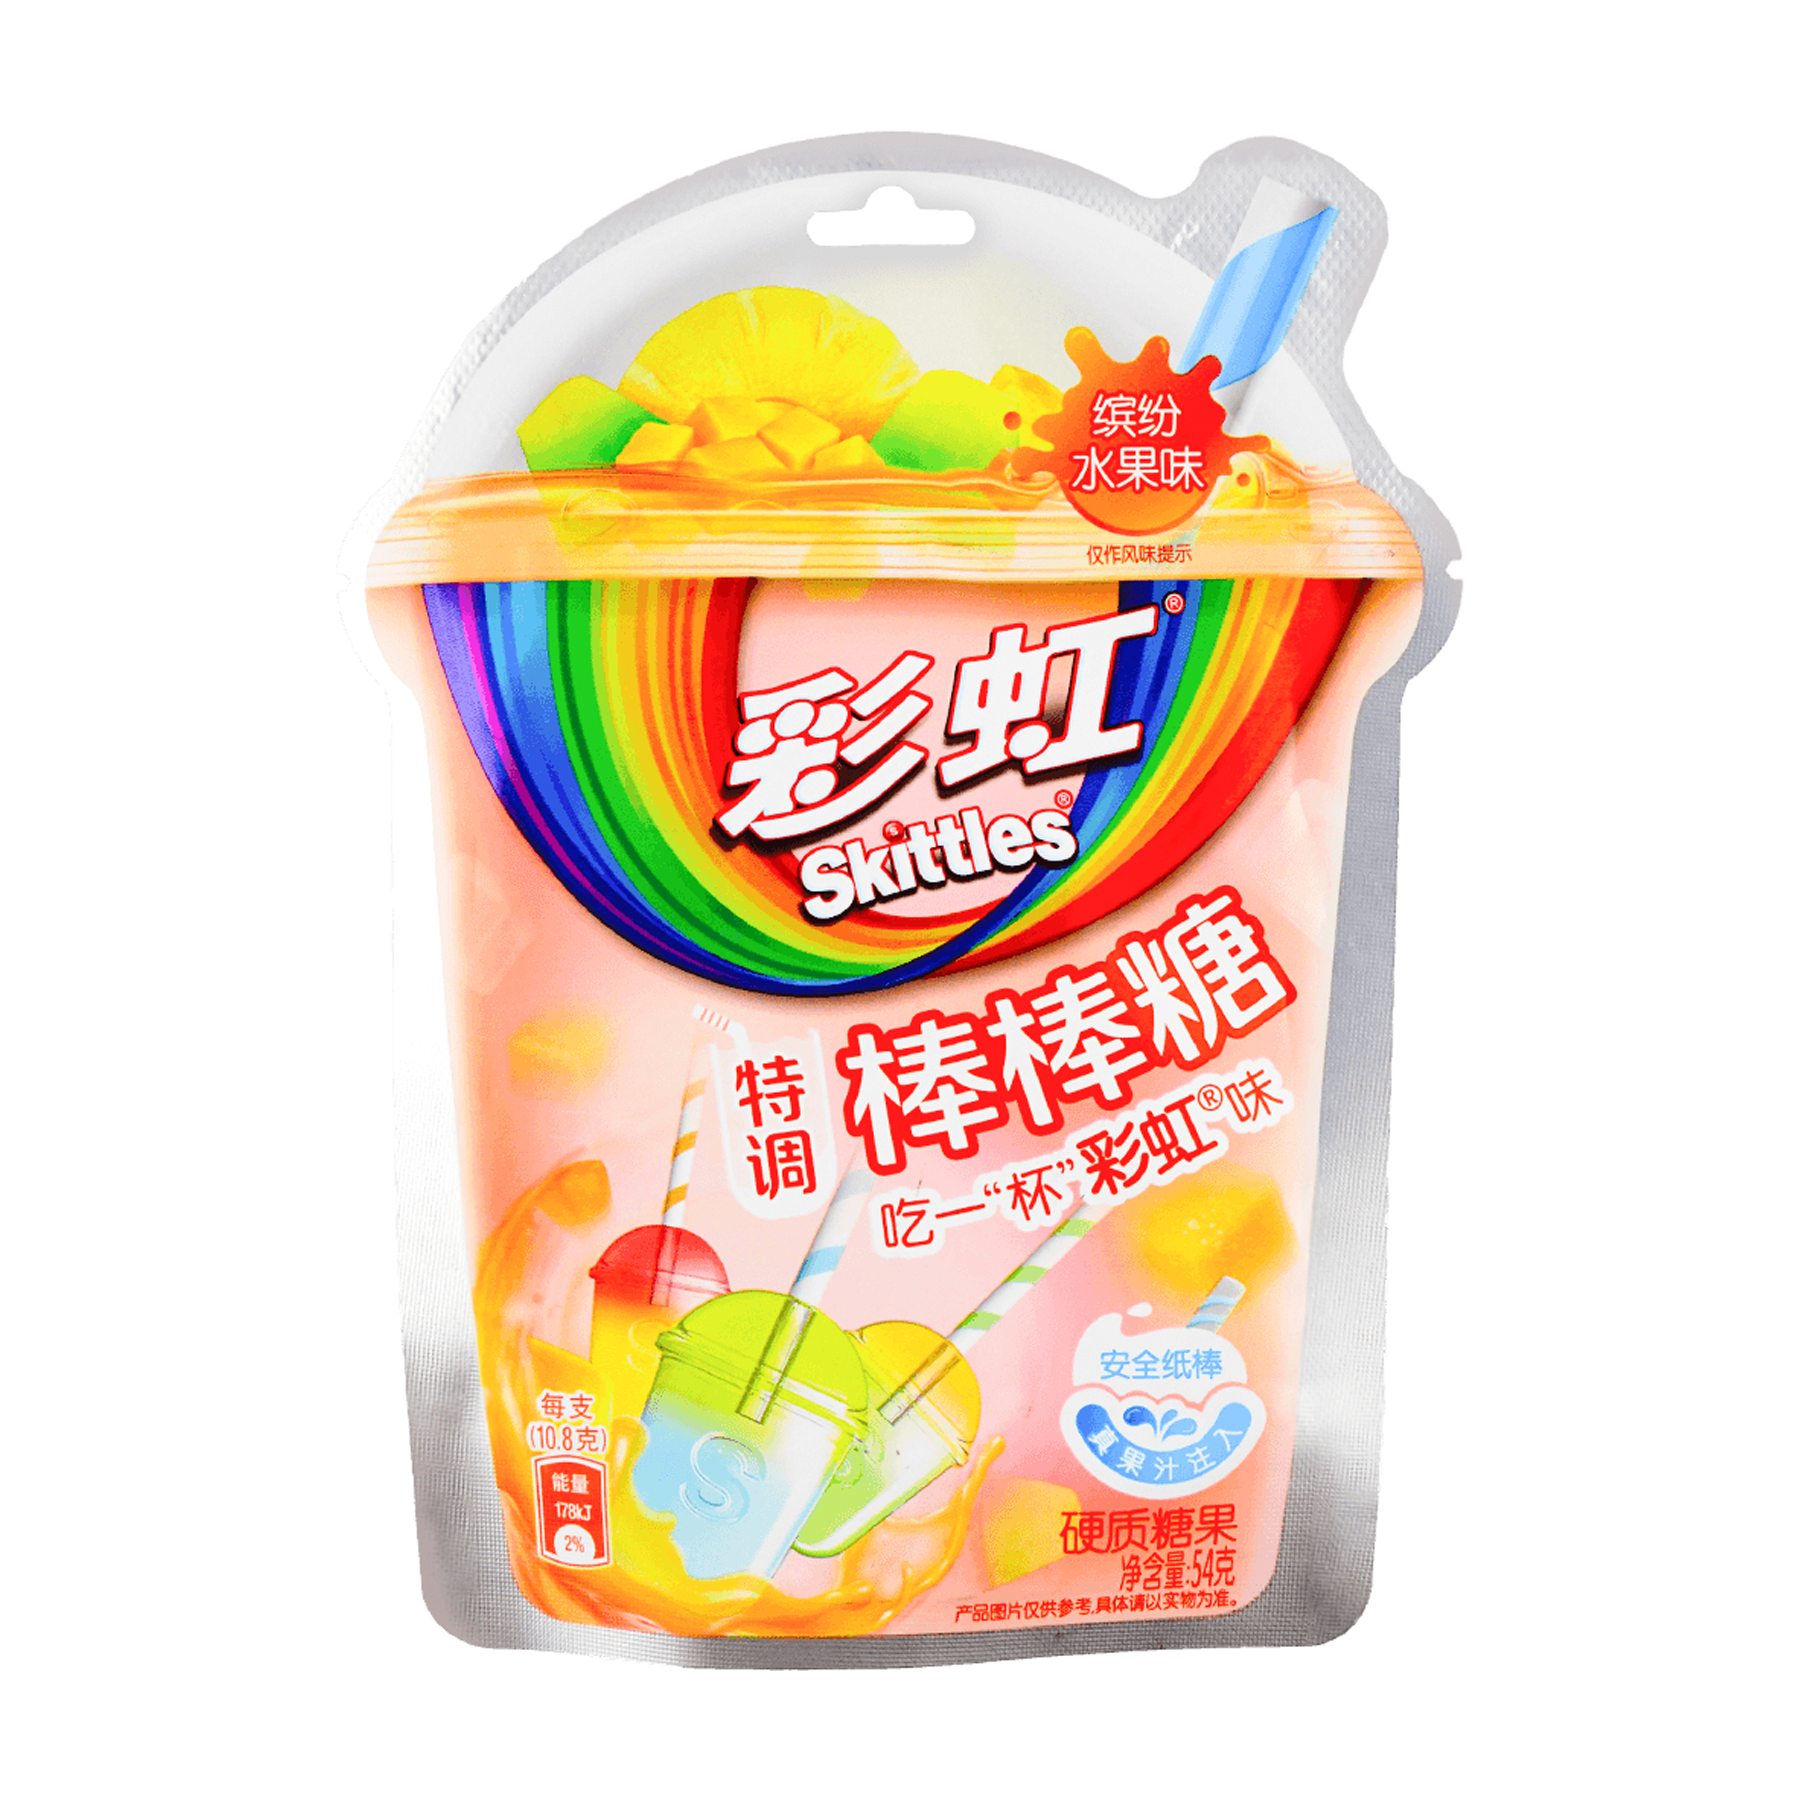 Skittles Rainbow Lollipop Fruit Flavor (52G)